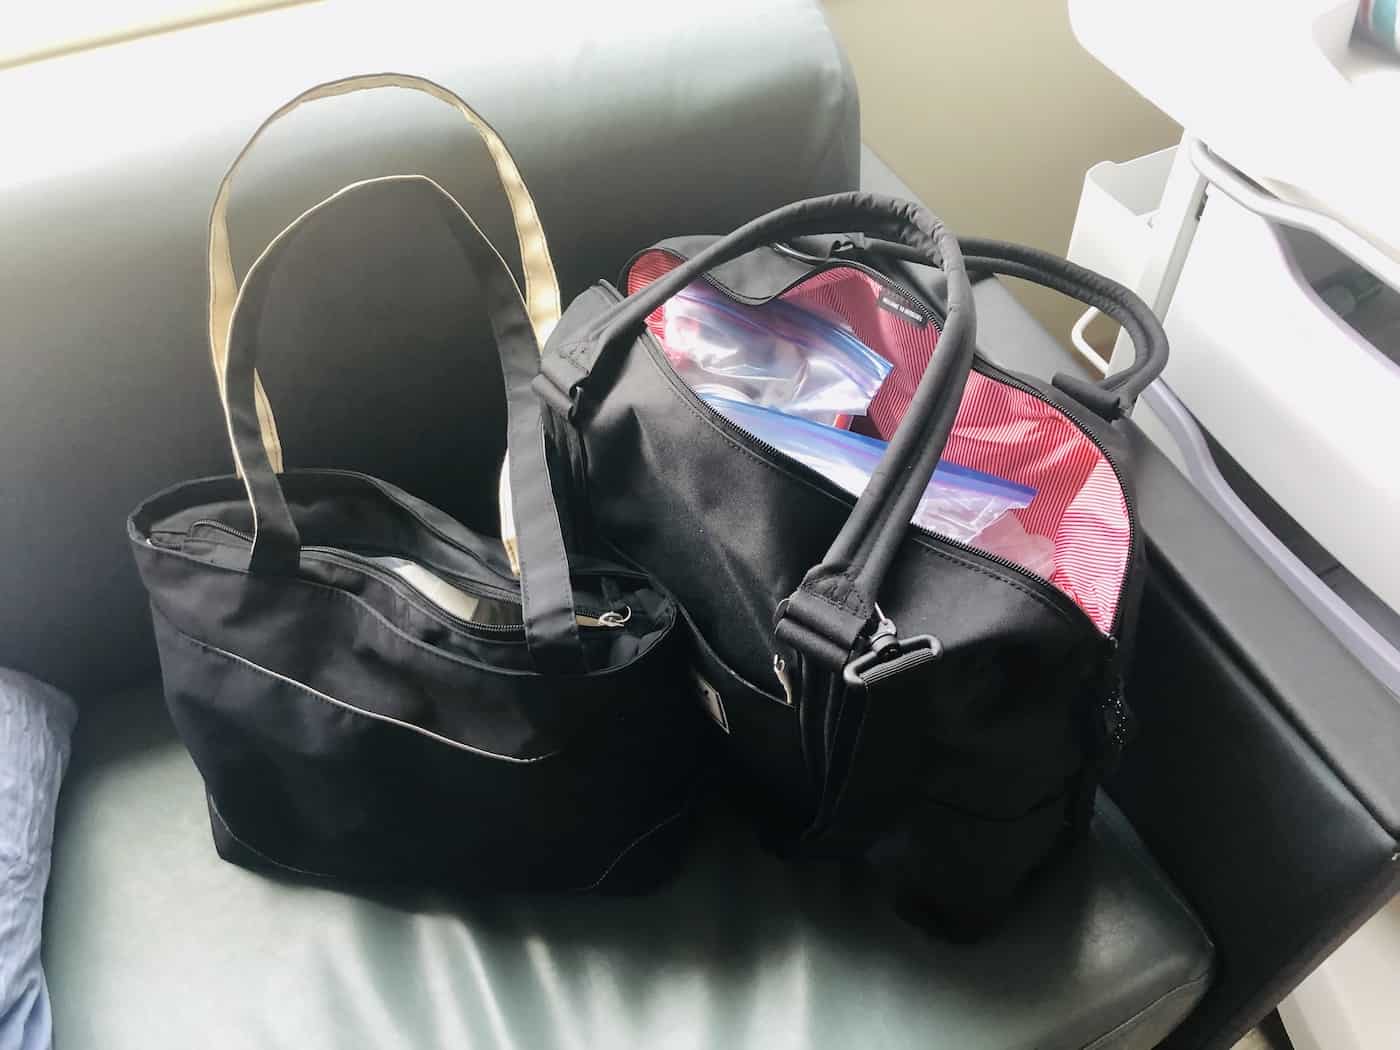 Packing a hospital bag